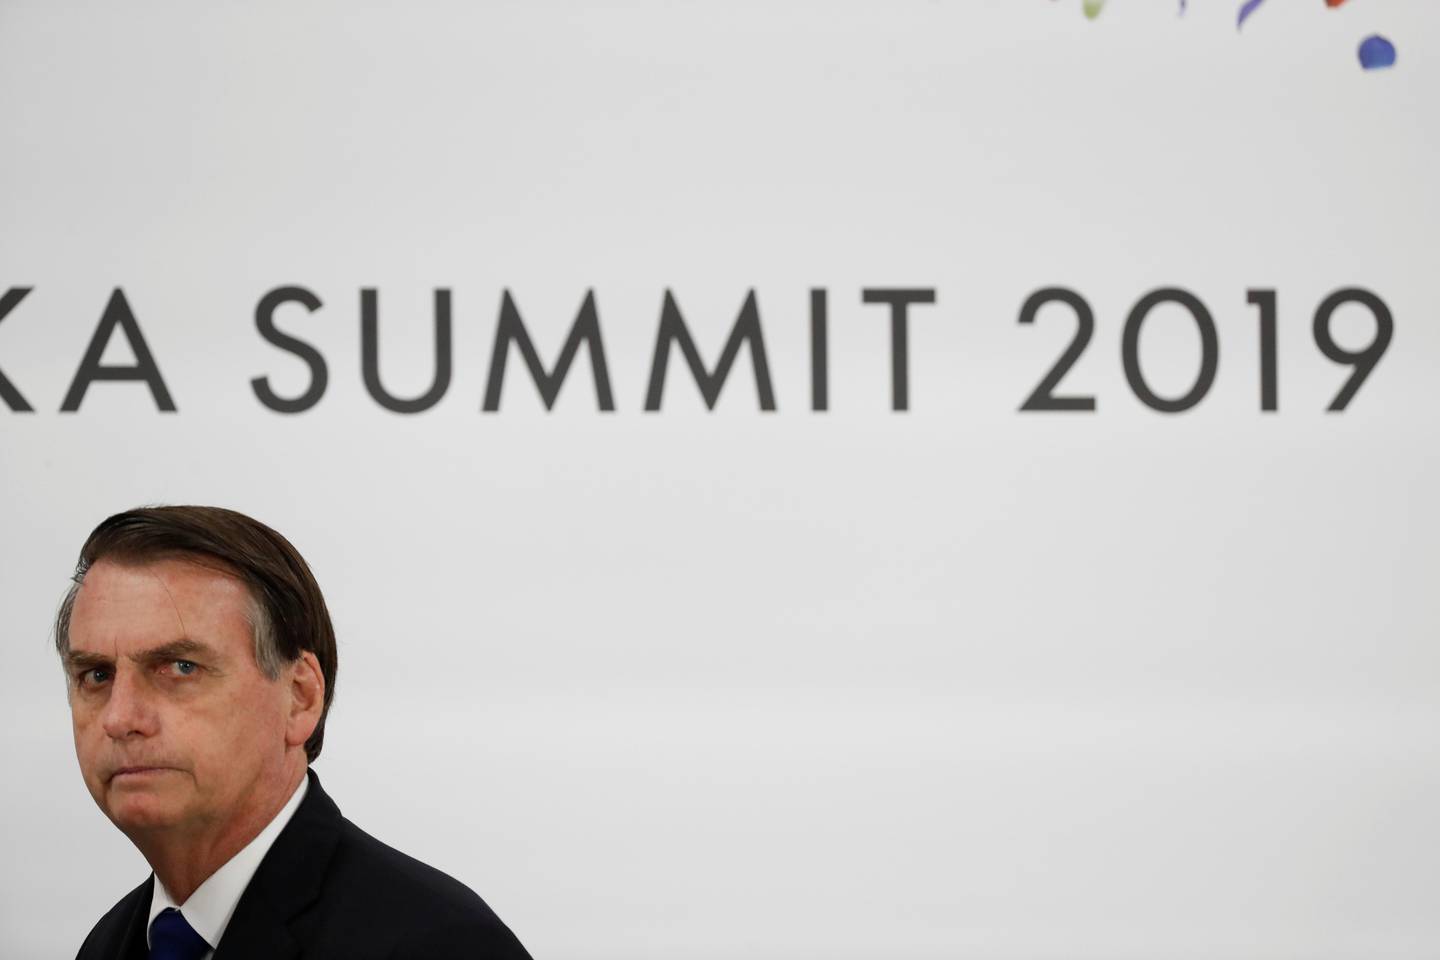 Brazil's President Jair Bolsonaro during a news conference at the G20 summit in Osaka, Japan, June 29, 2019. REUTERS/Jorge Silva